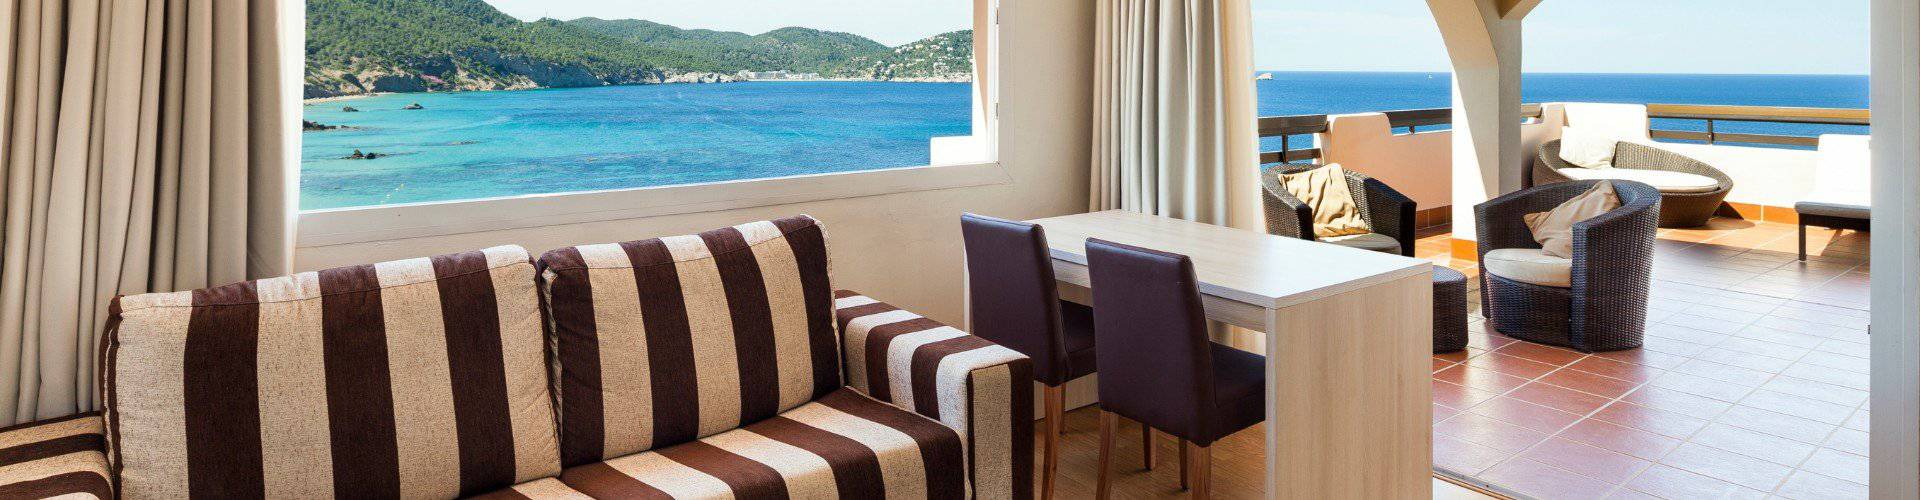 Rooms Invisa Hotel Cala Verde Es Figueral Beach